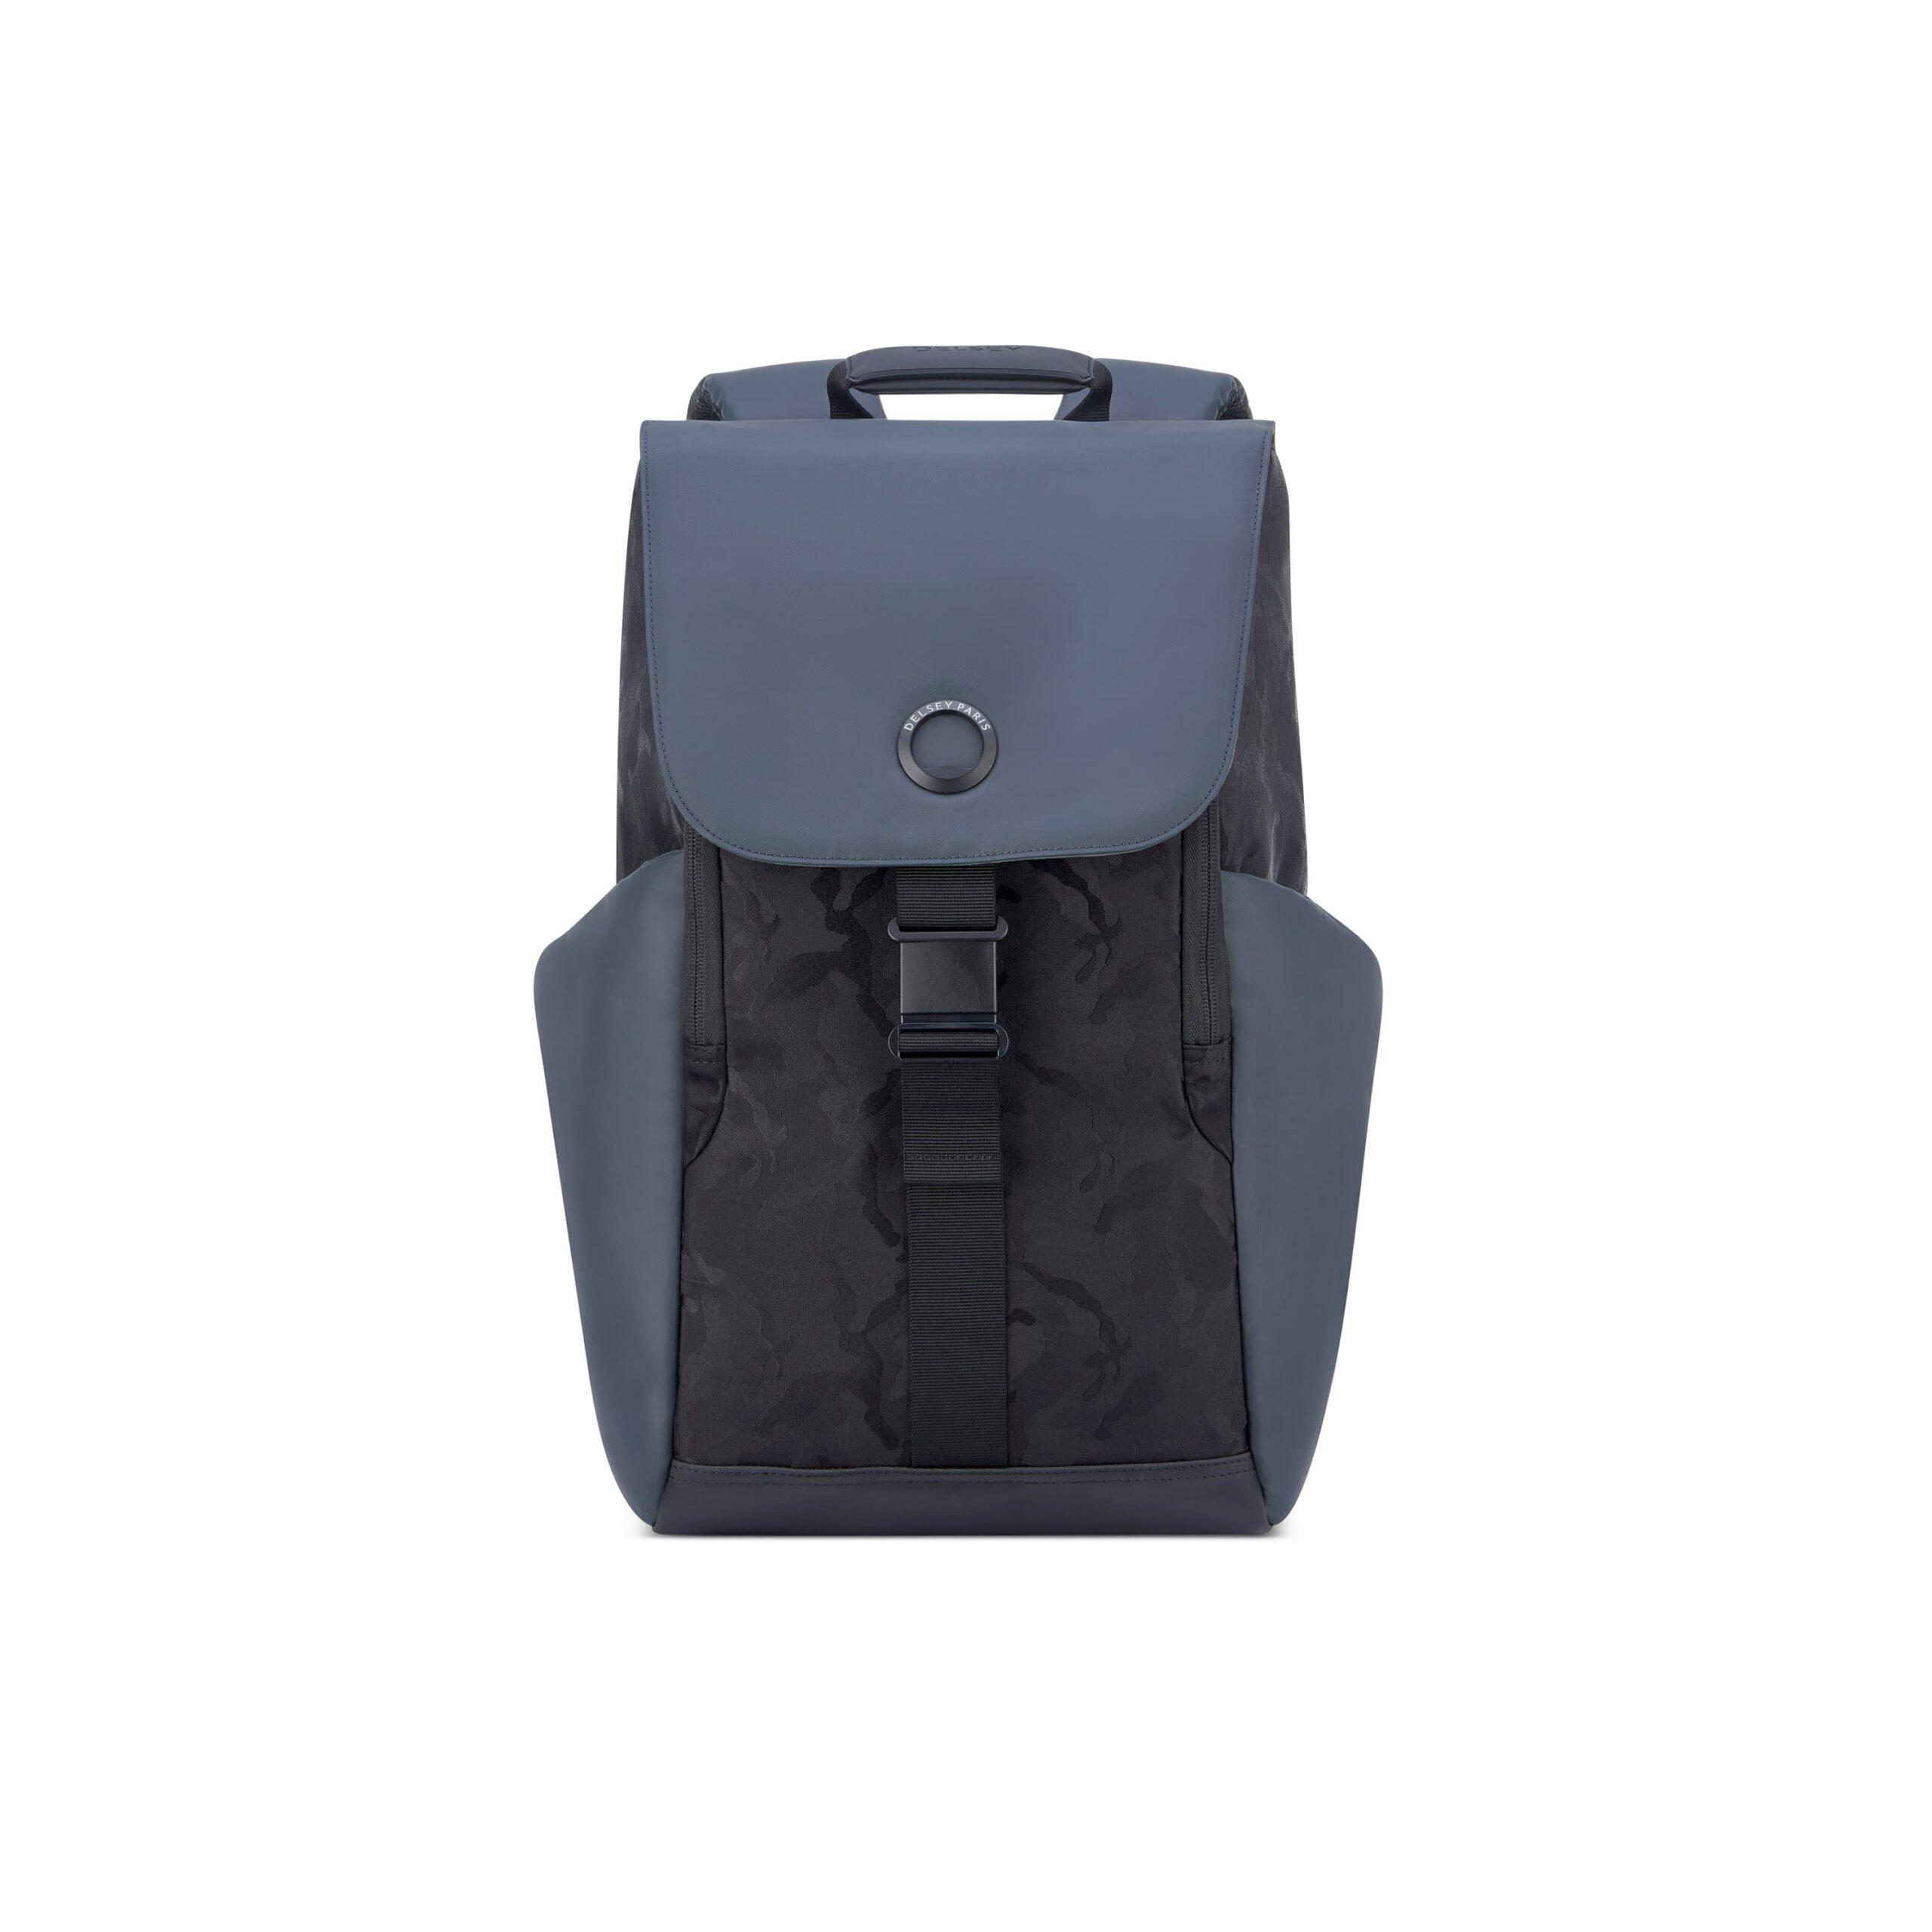 شنط ظهر سيكيورفلاب للابتوب 15 بوصة 20 لتر بوليستر لون أسود من ديلسي Delsey Securflap Laptop Protection Backpack